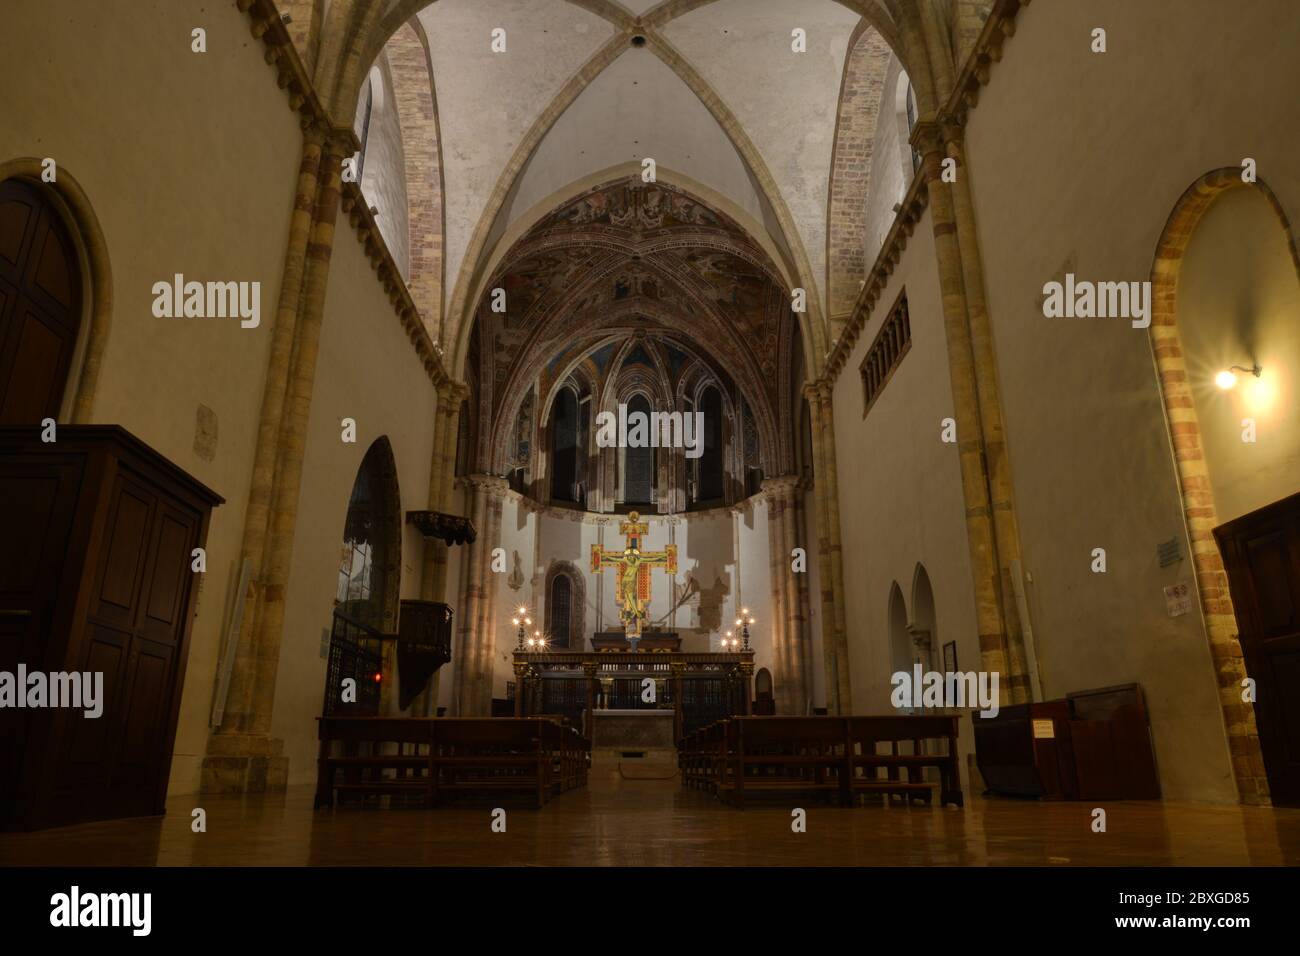 Interior of the Basilica di Santa Chiara, Assisi, Italy Stock Photo